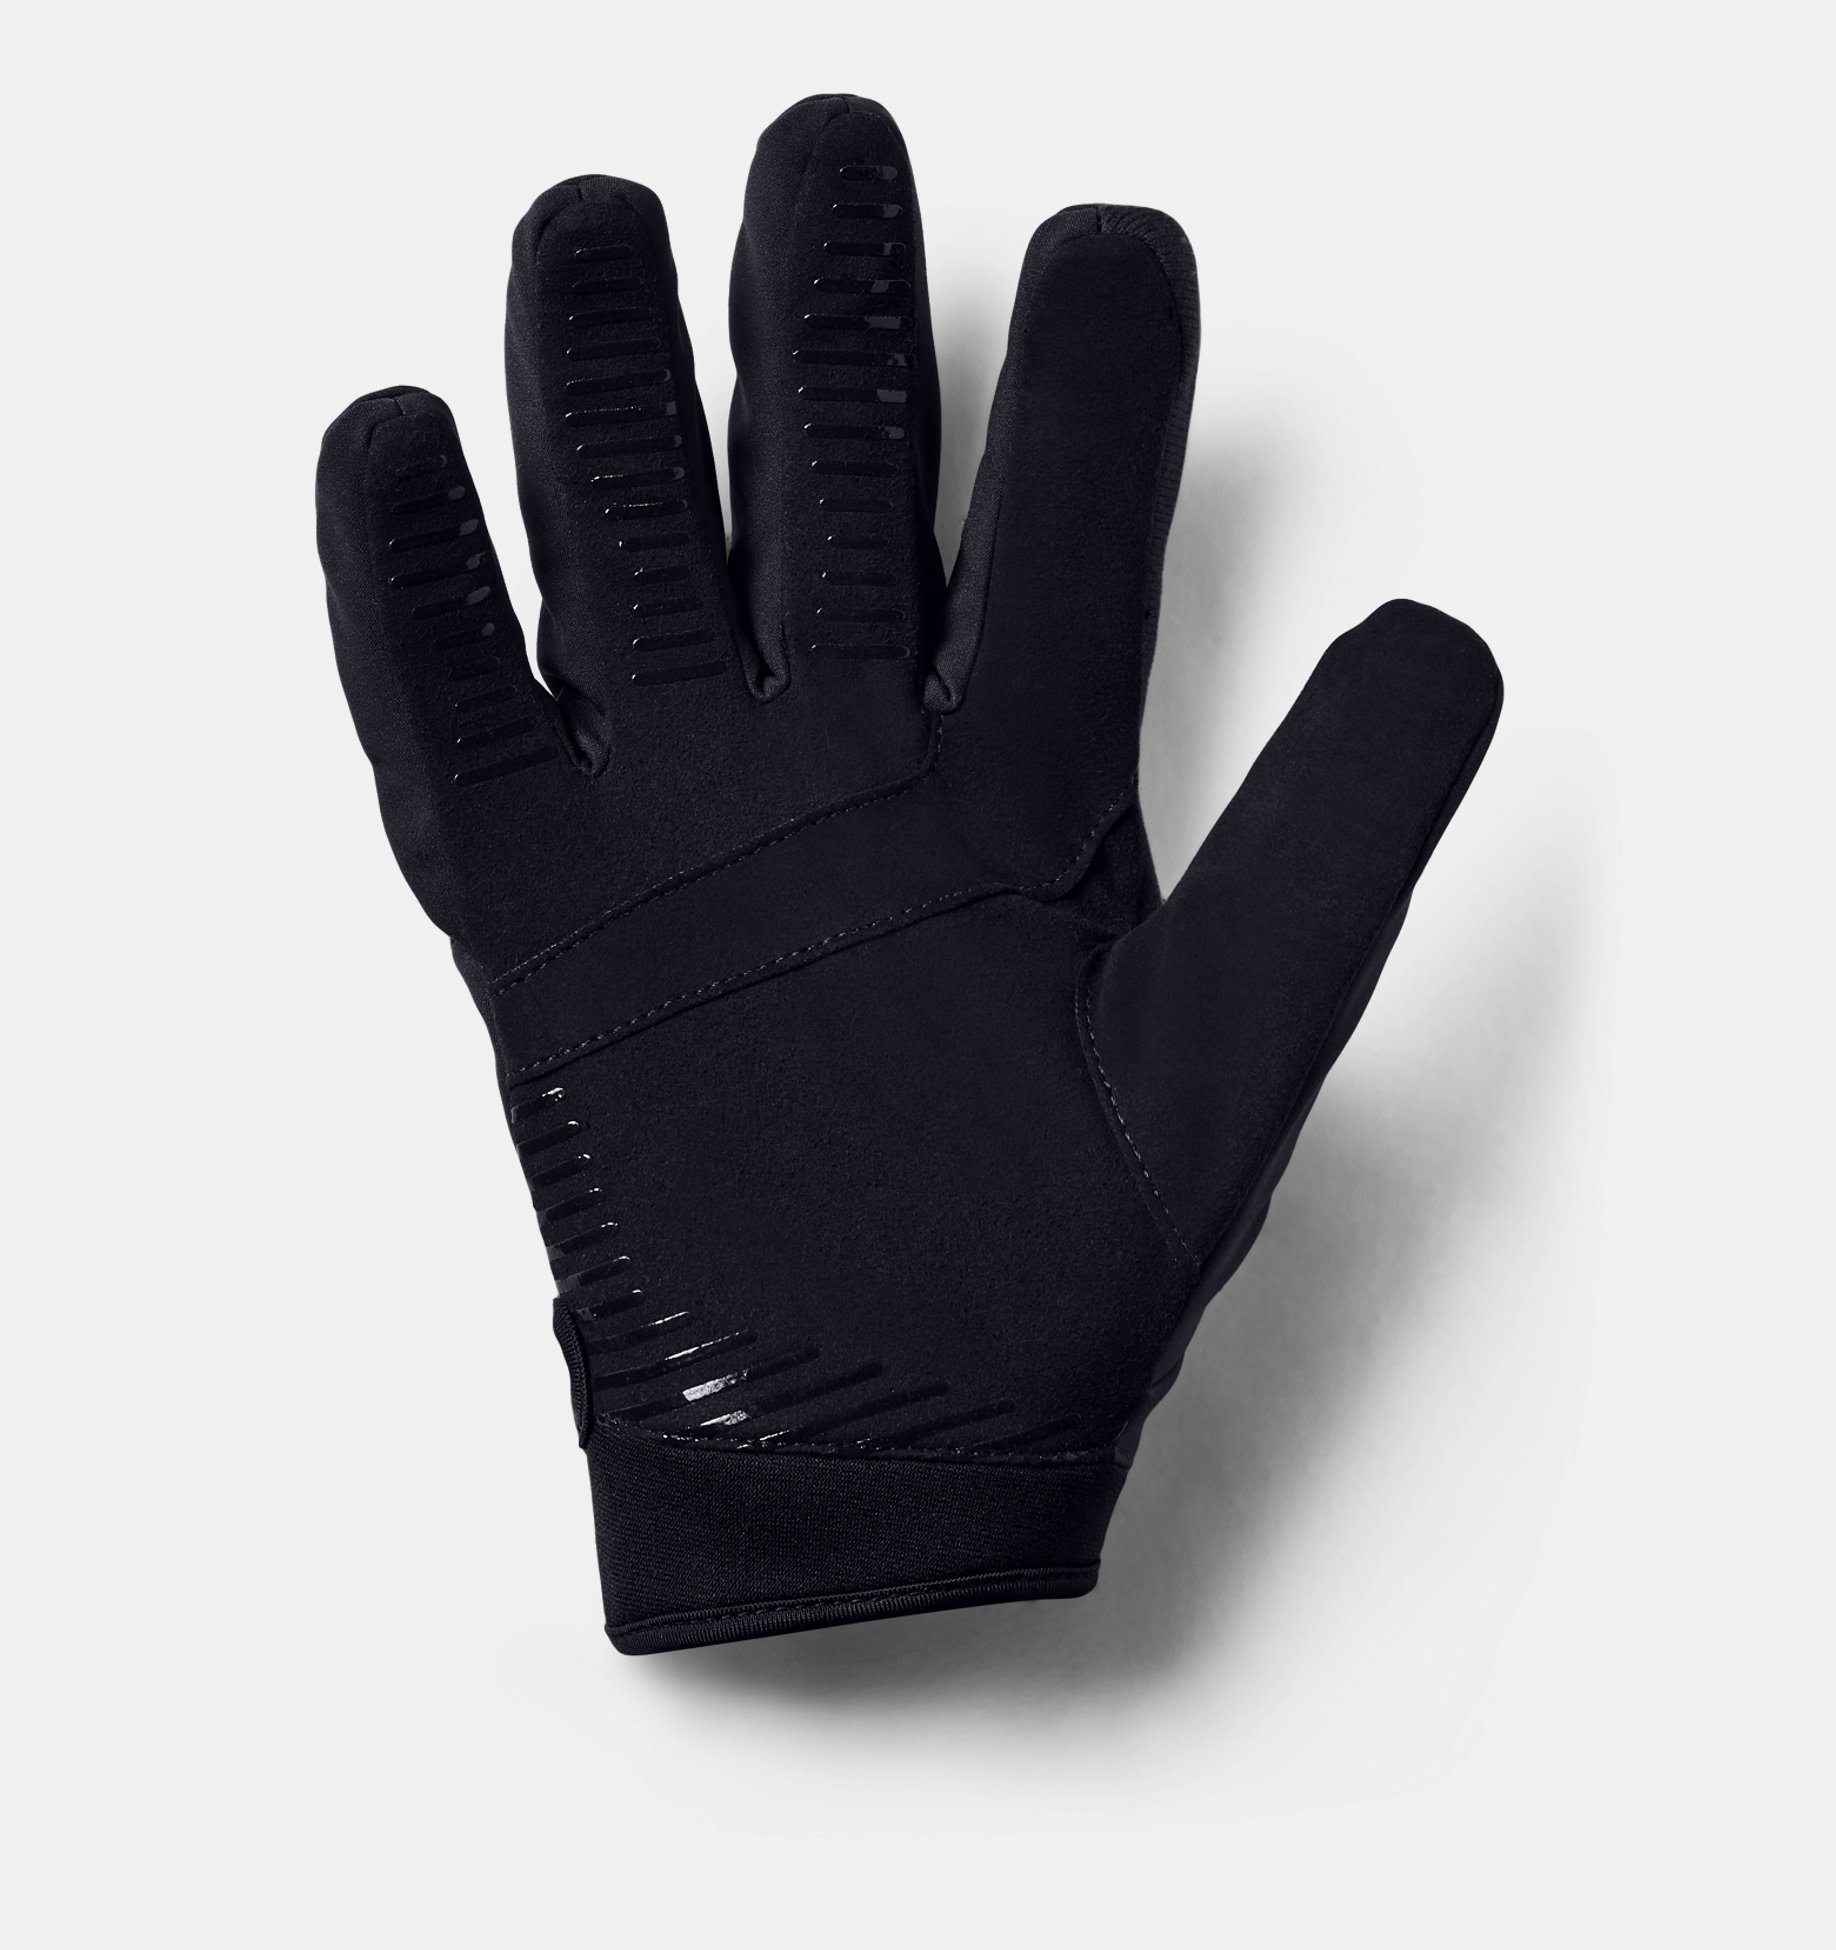 Under Armour Men's UA Sideline ColdGear Football Gloves 1290811-001 Black 